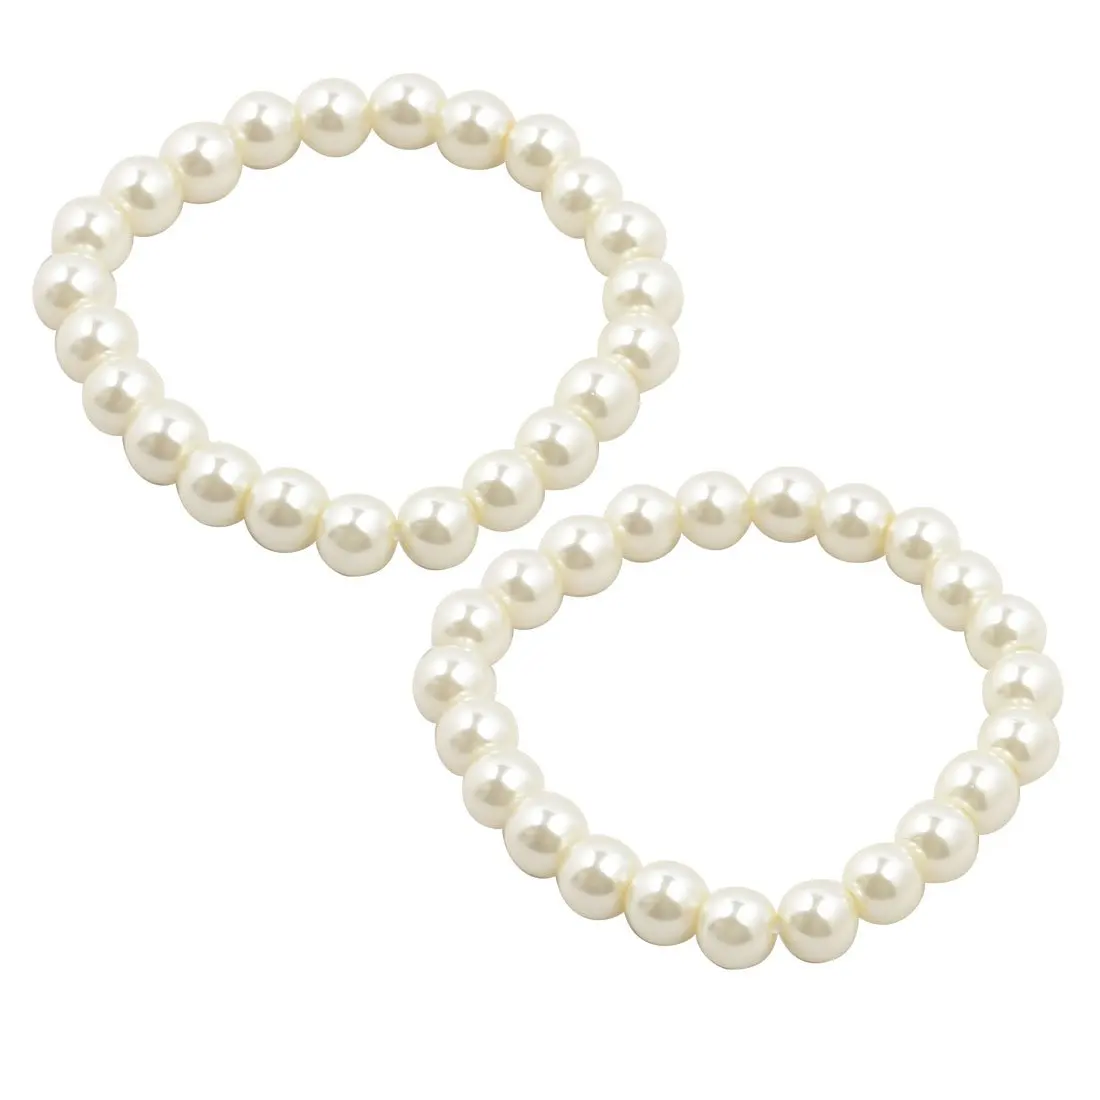 2 Pcs White Faux Pearls Beaded Elastic Bracelet Wrist Ornament for